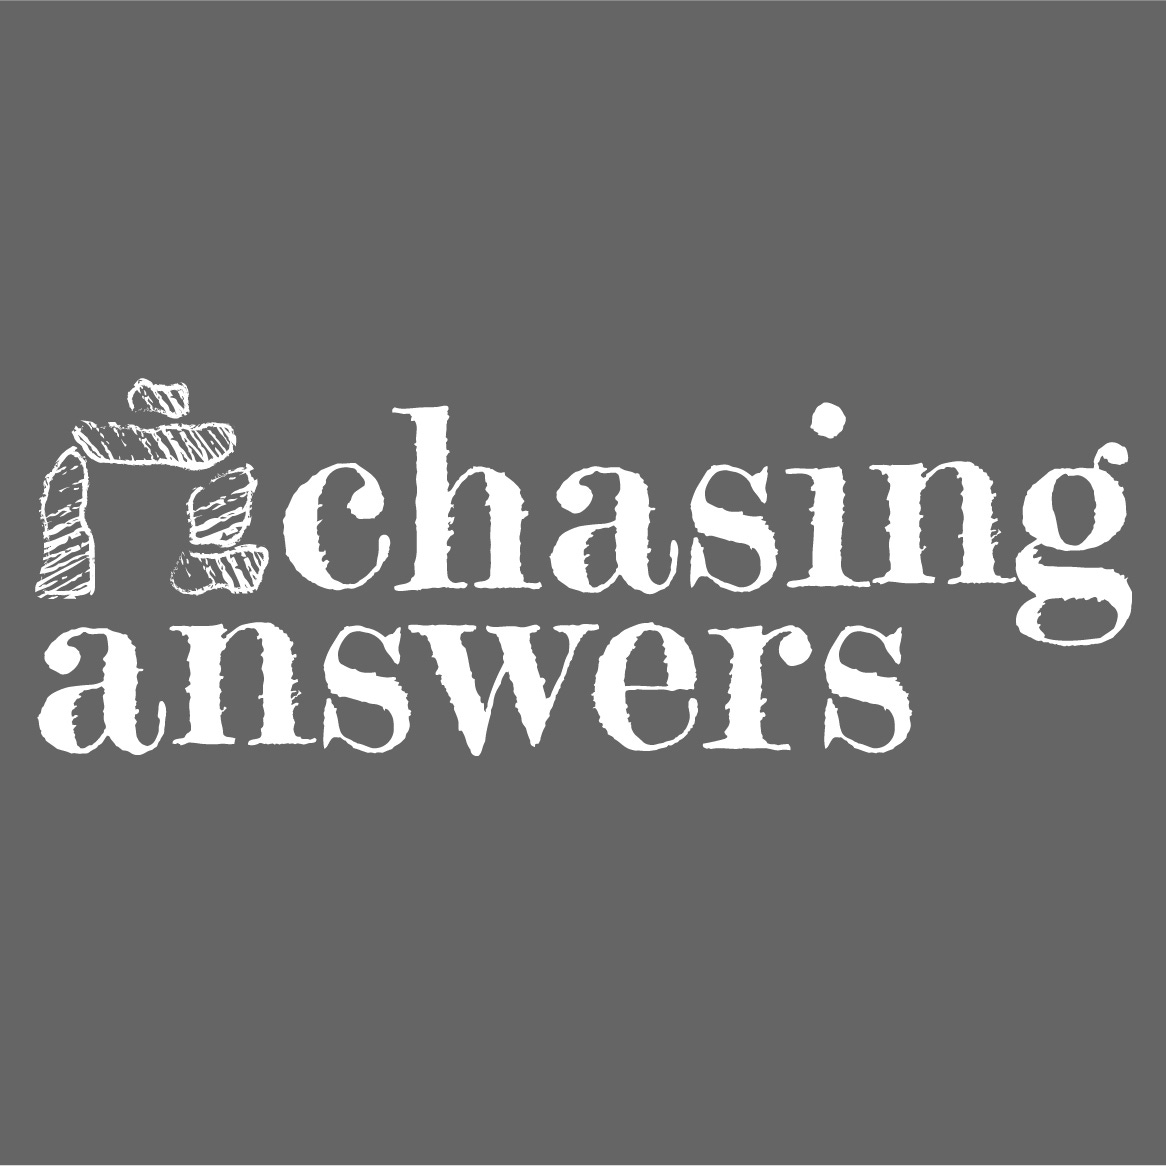 chasing answers